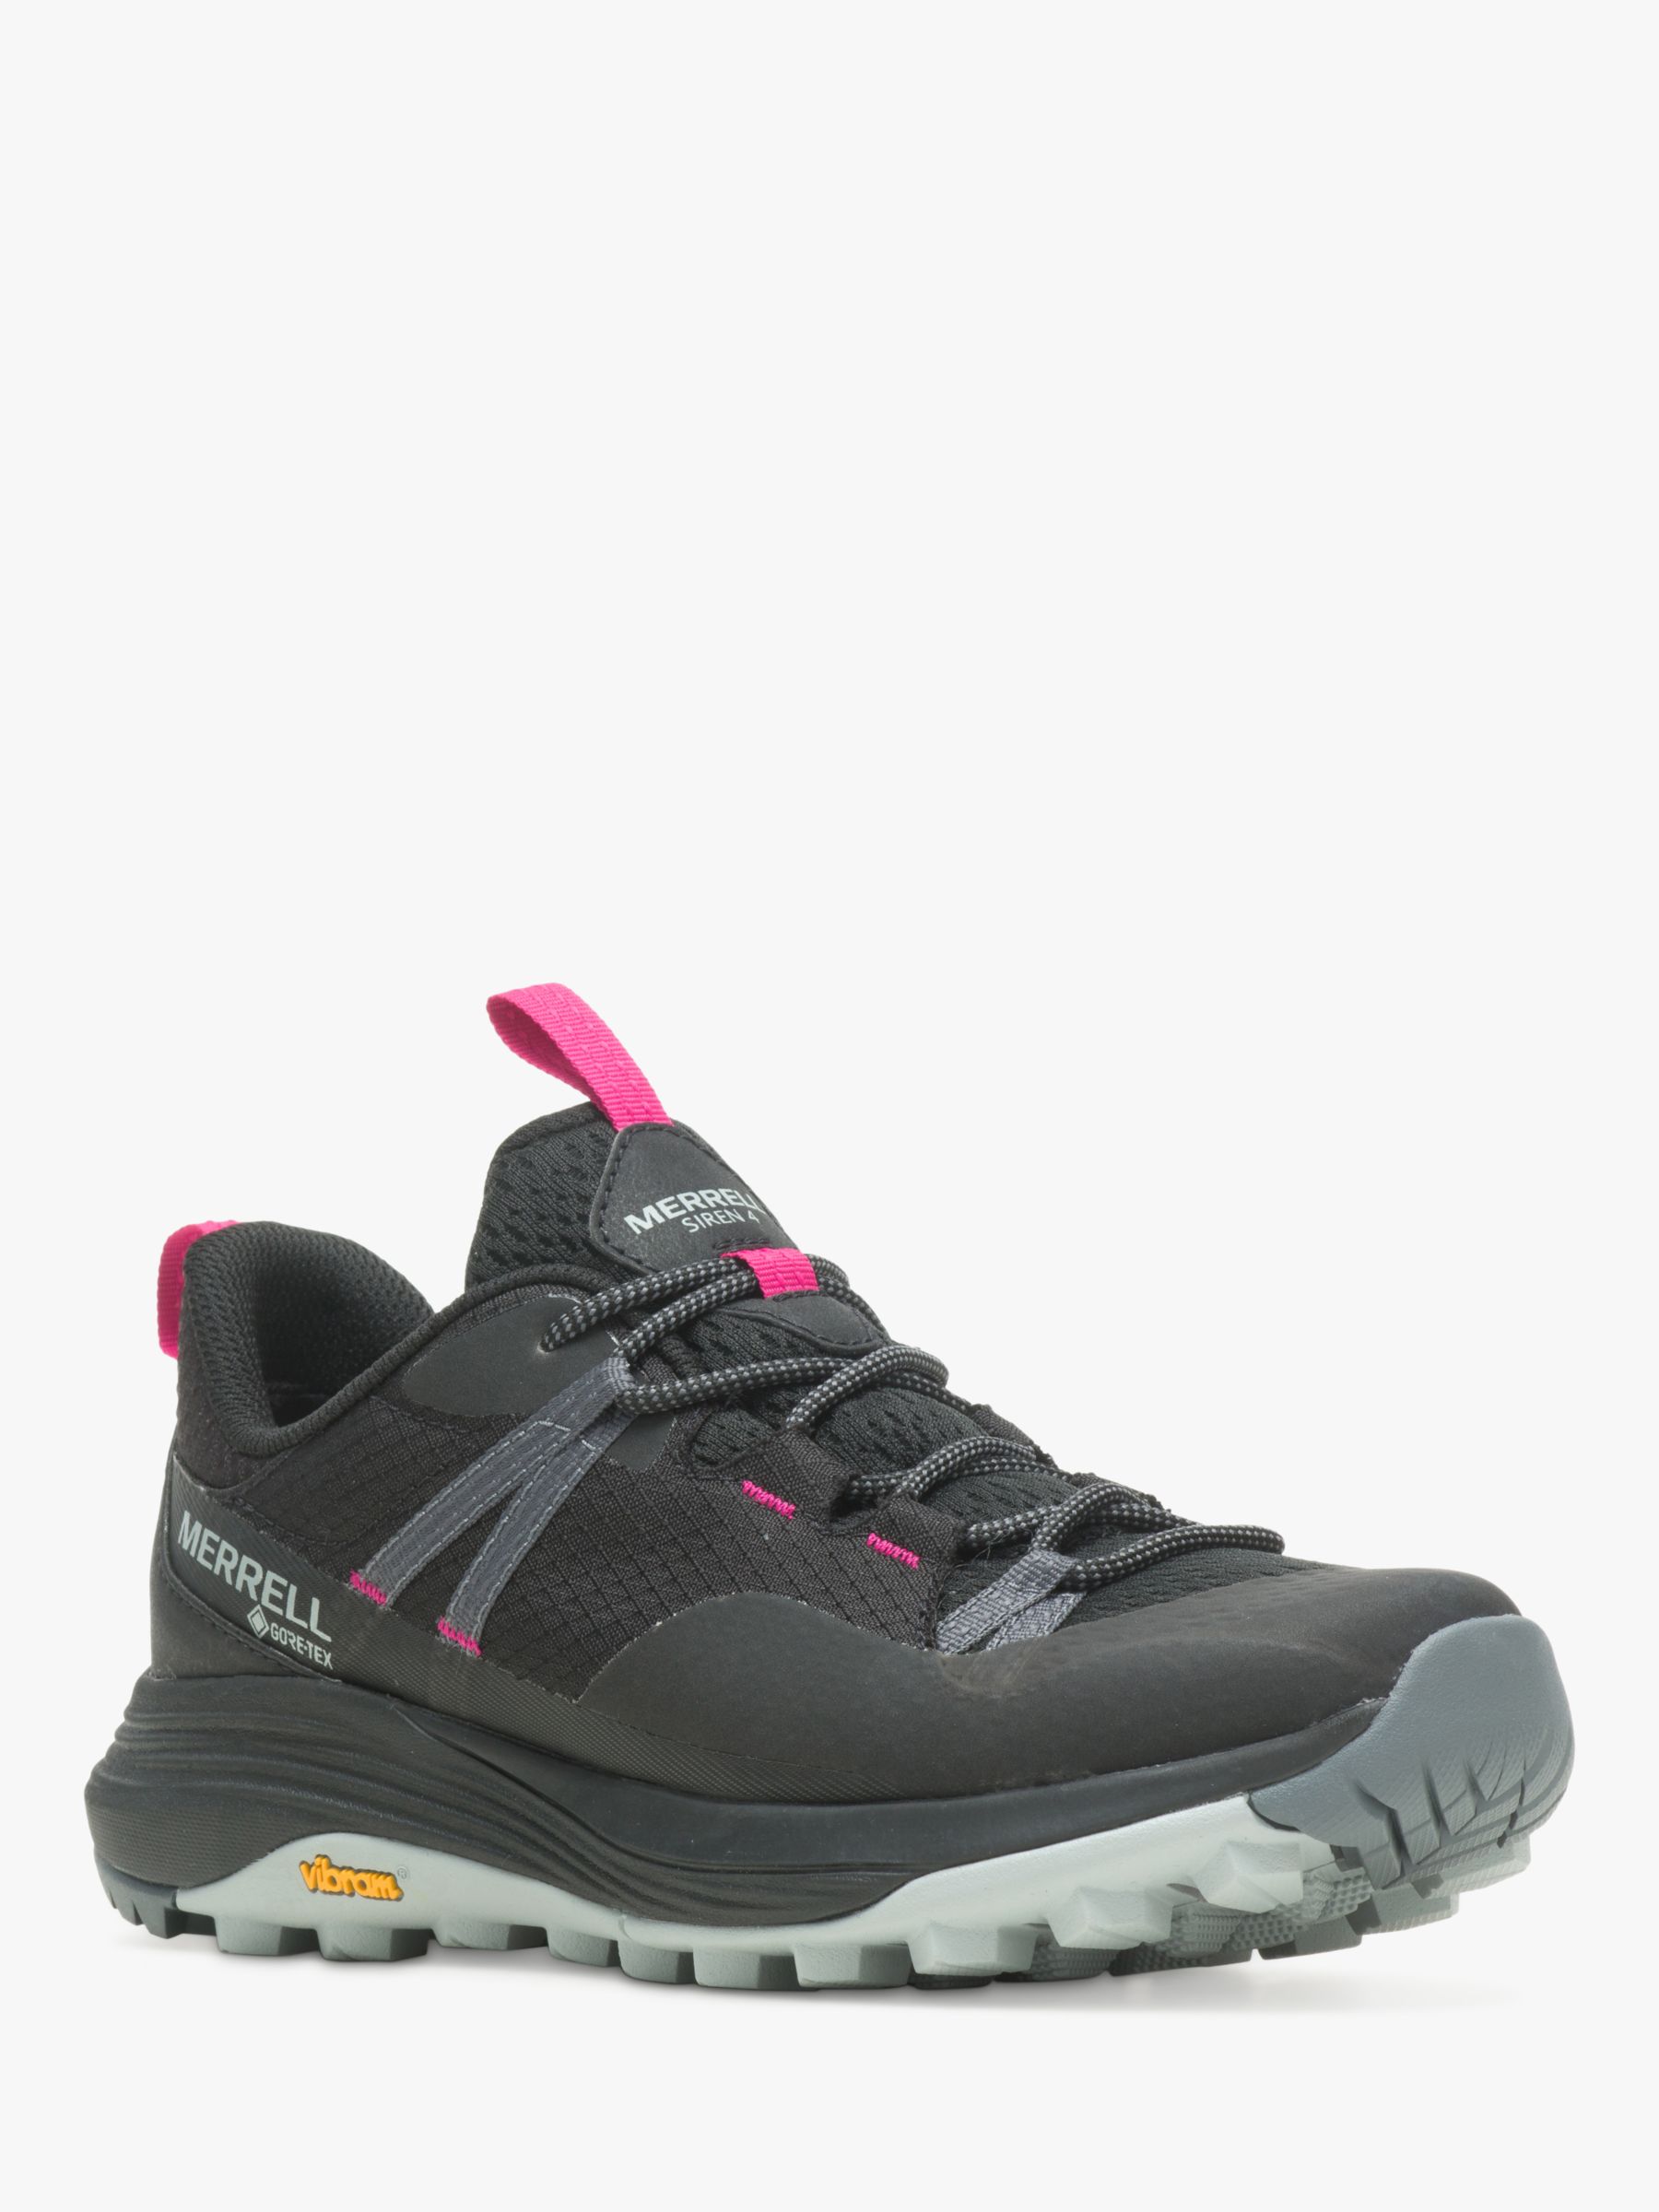 Merrell Siren 4 Women's Waterproof Gore-Tex Hiking Shoes, Black, 6